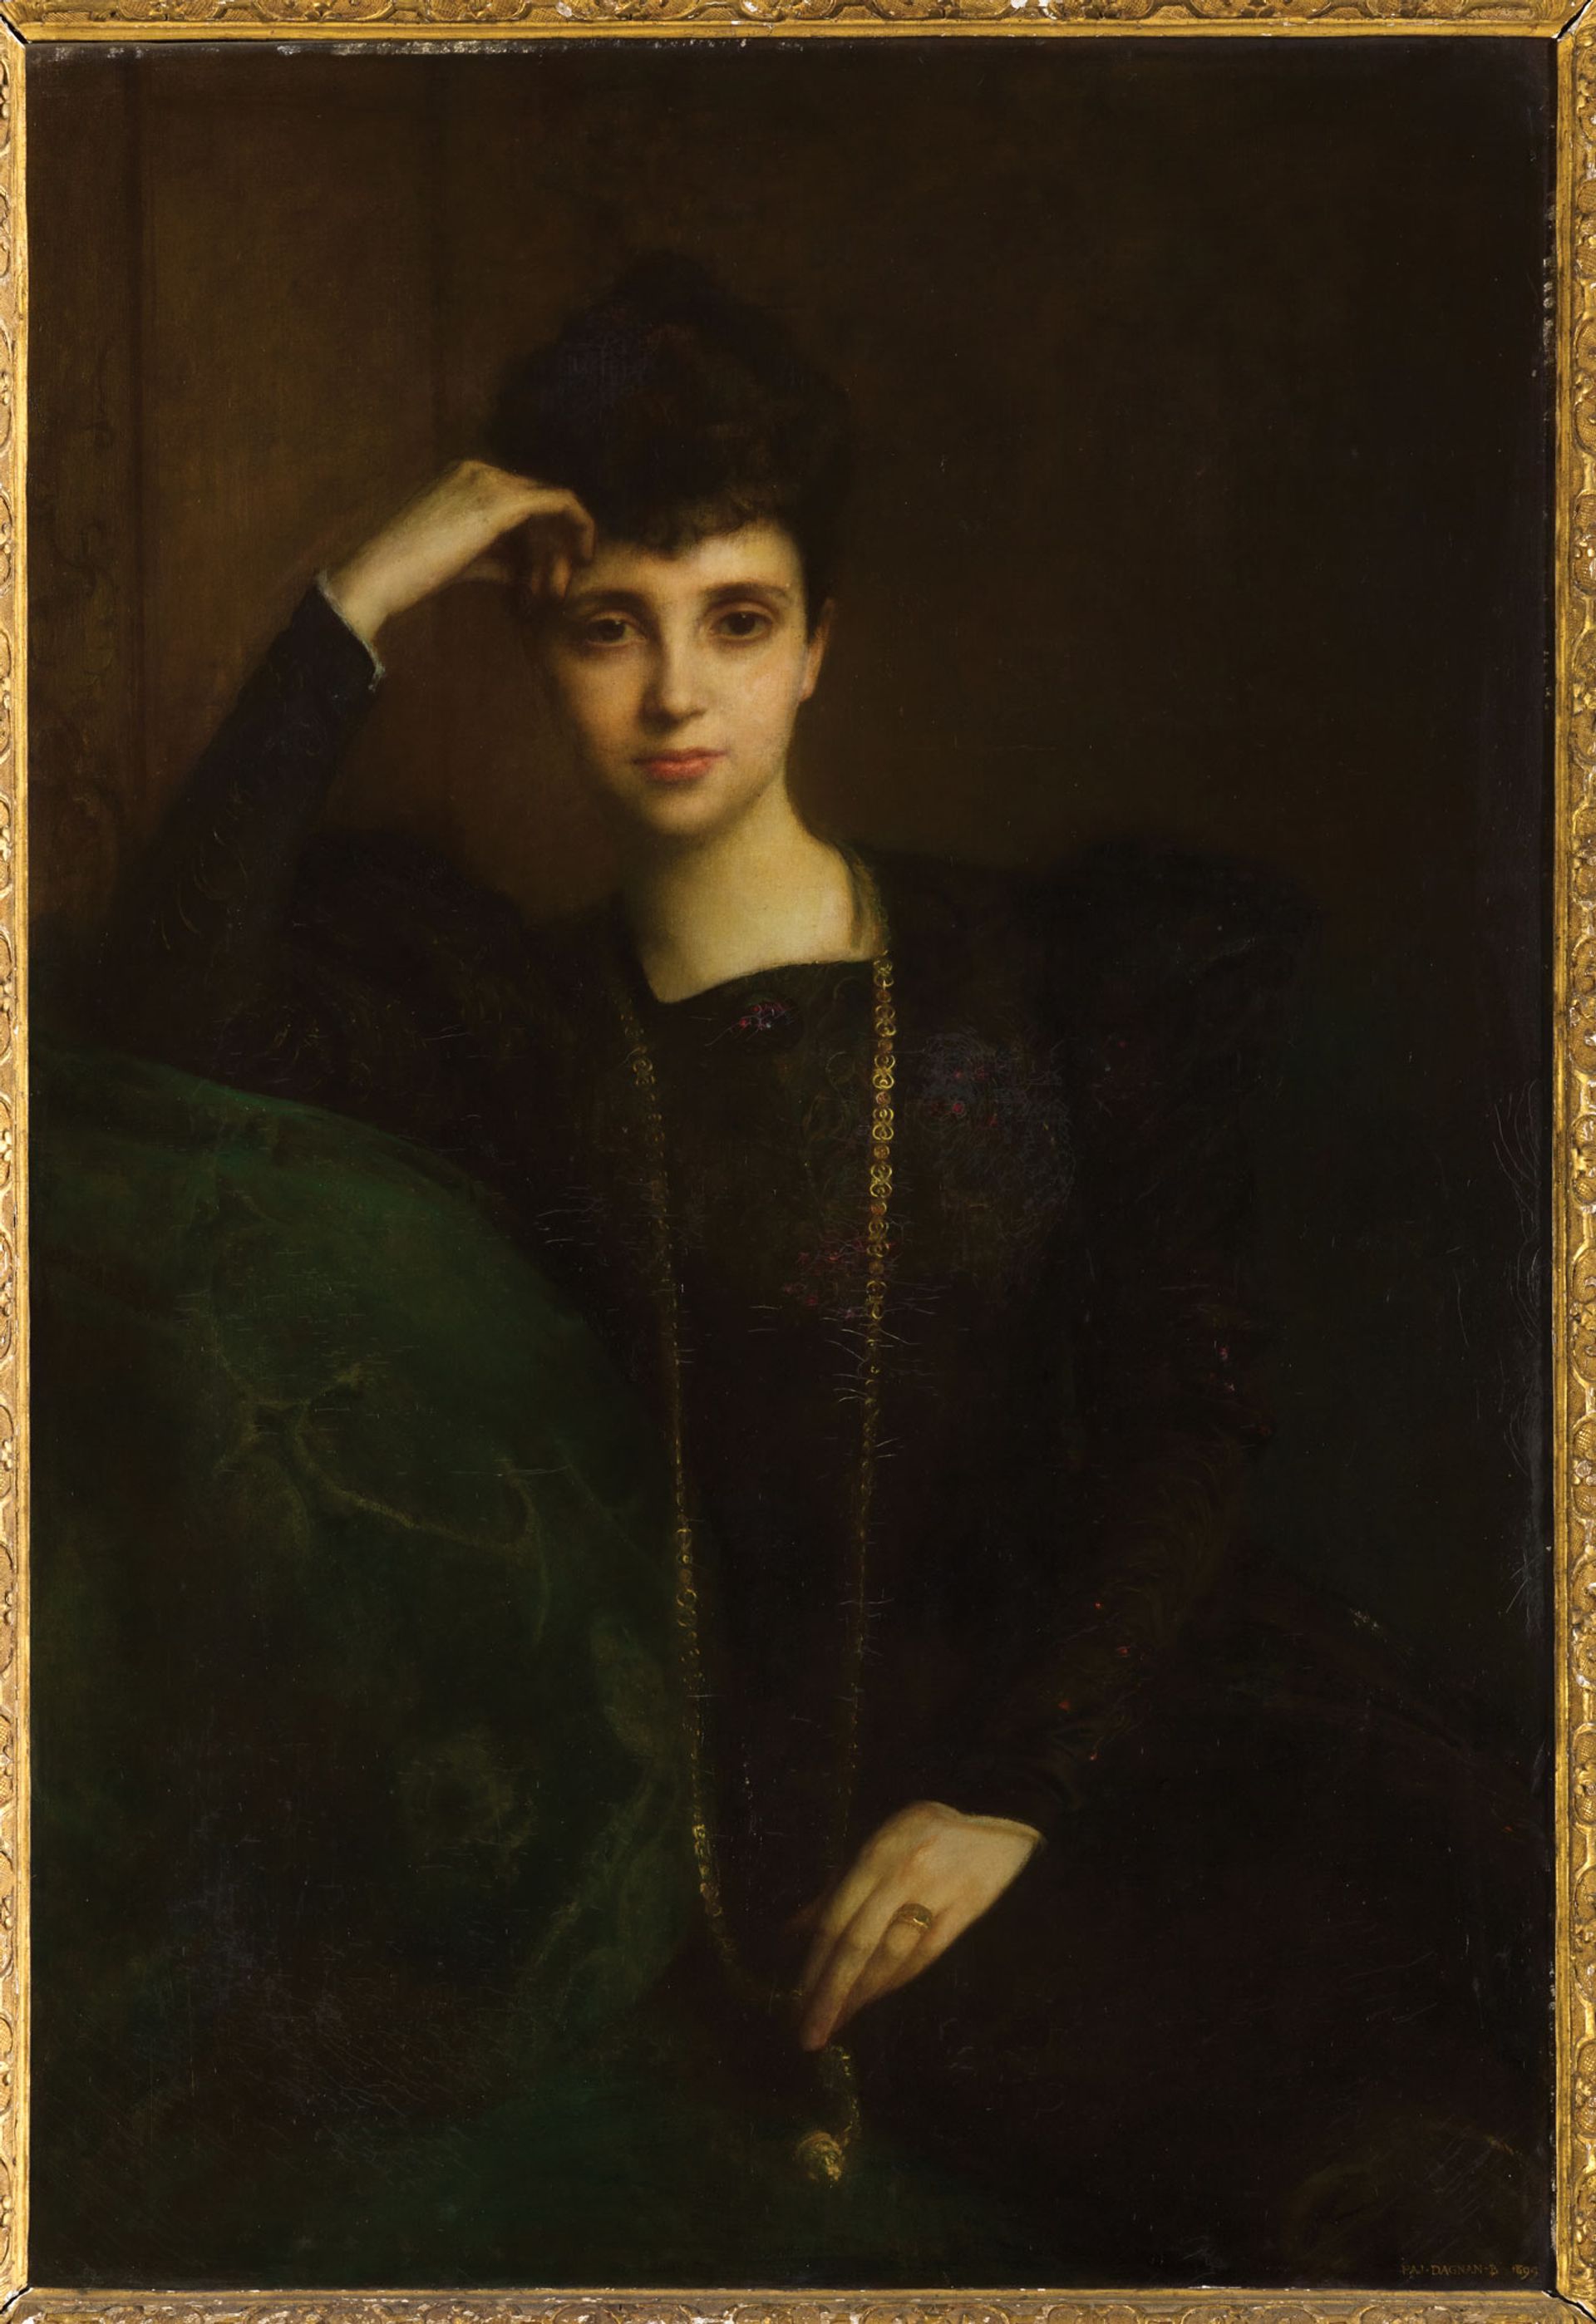 Eyes that see: portrait of Martine de Béhague, by Pascal Dagnan-Bouveret, 1899 Photographic copy by André Morin